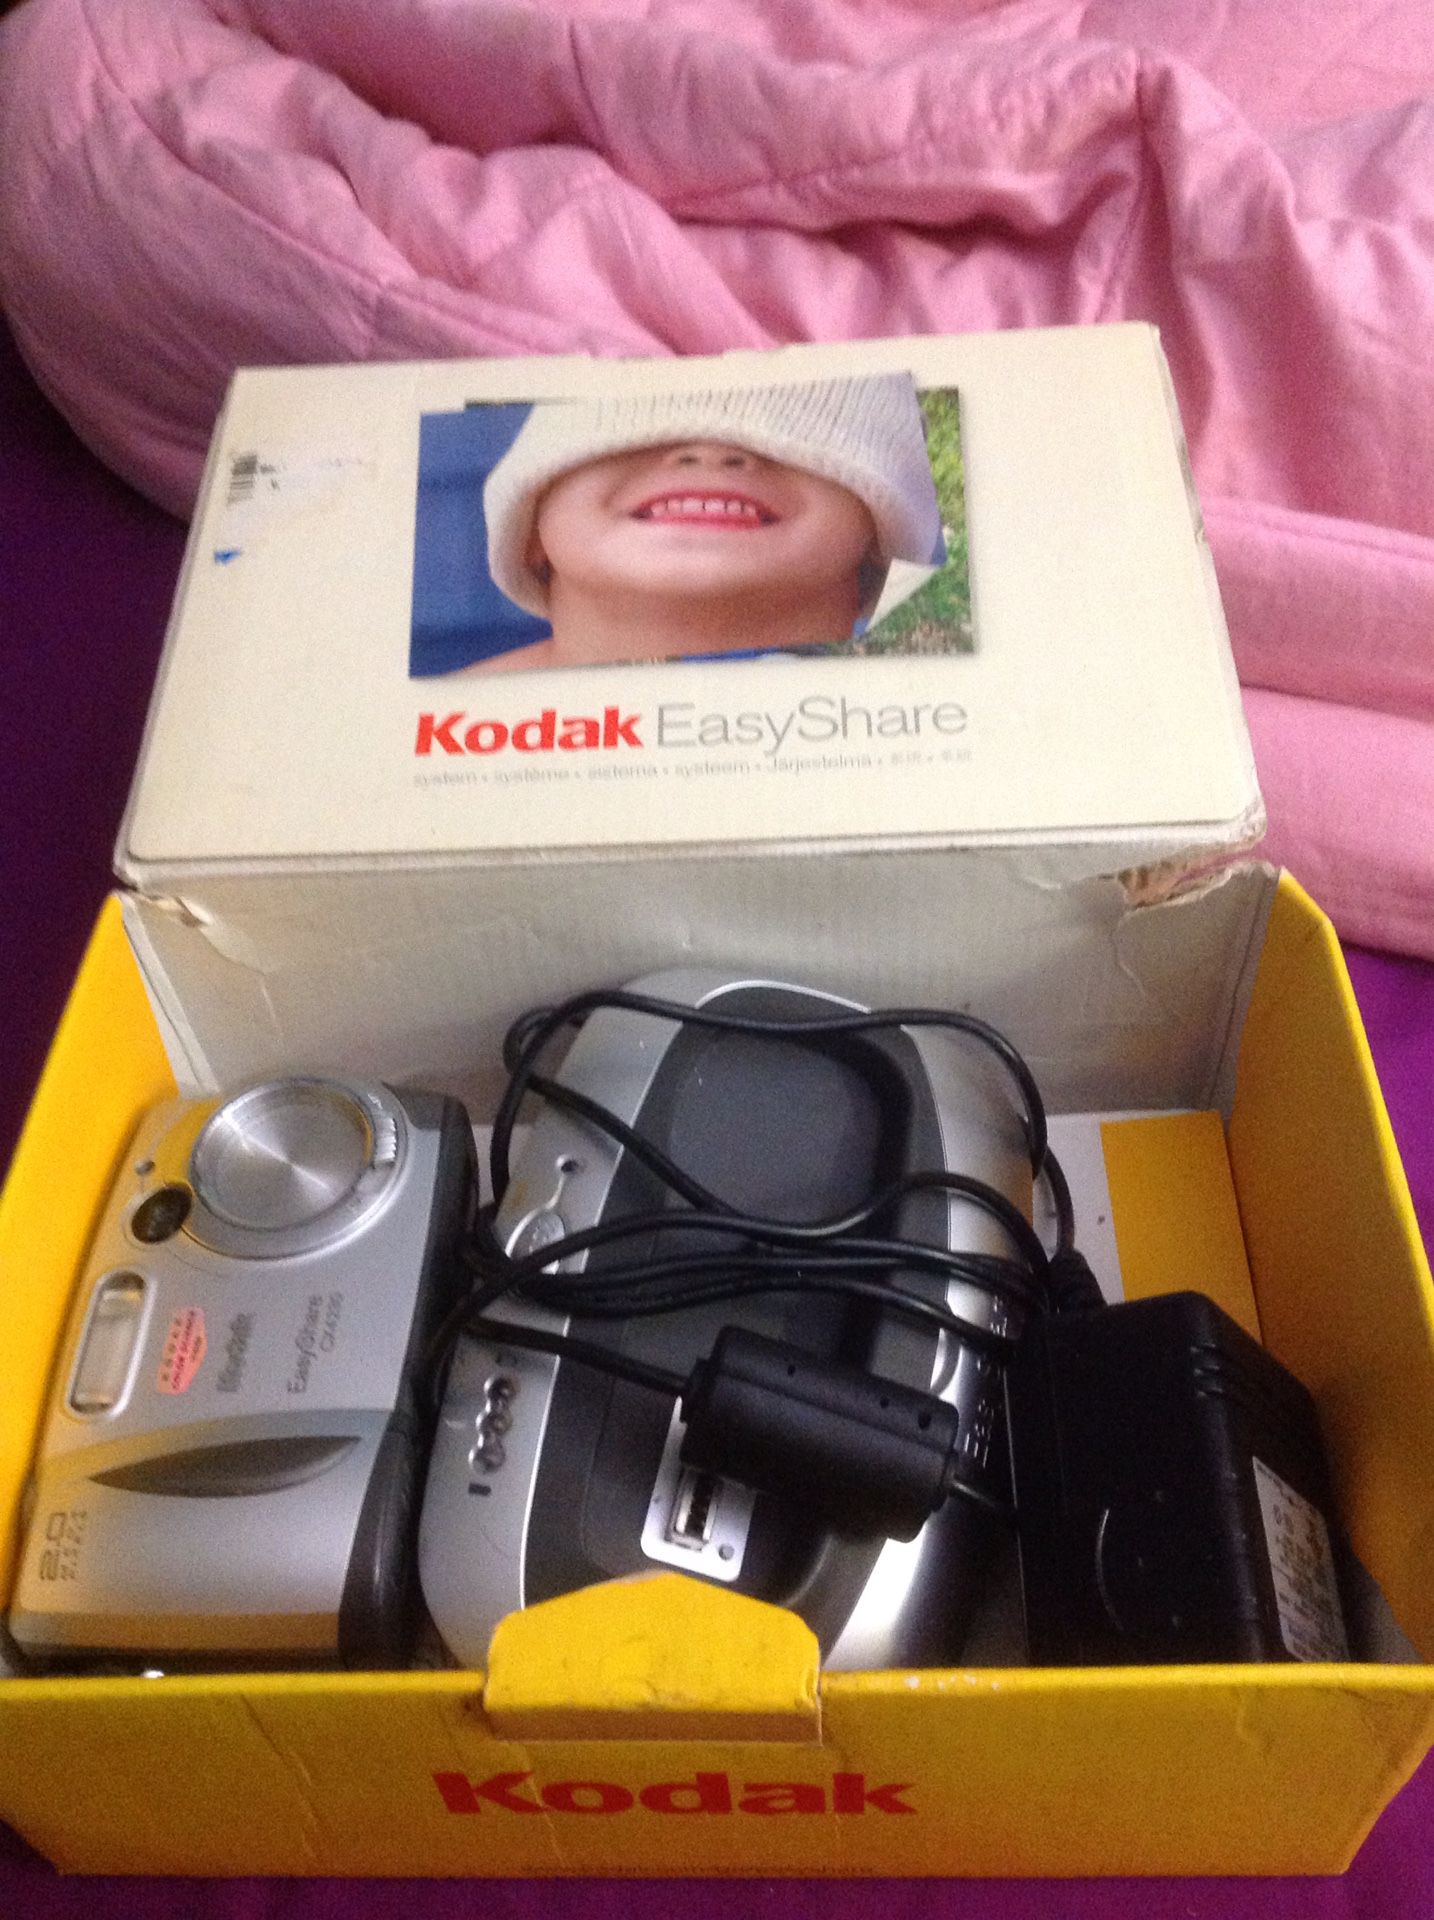 Kodak EasyShare camera